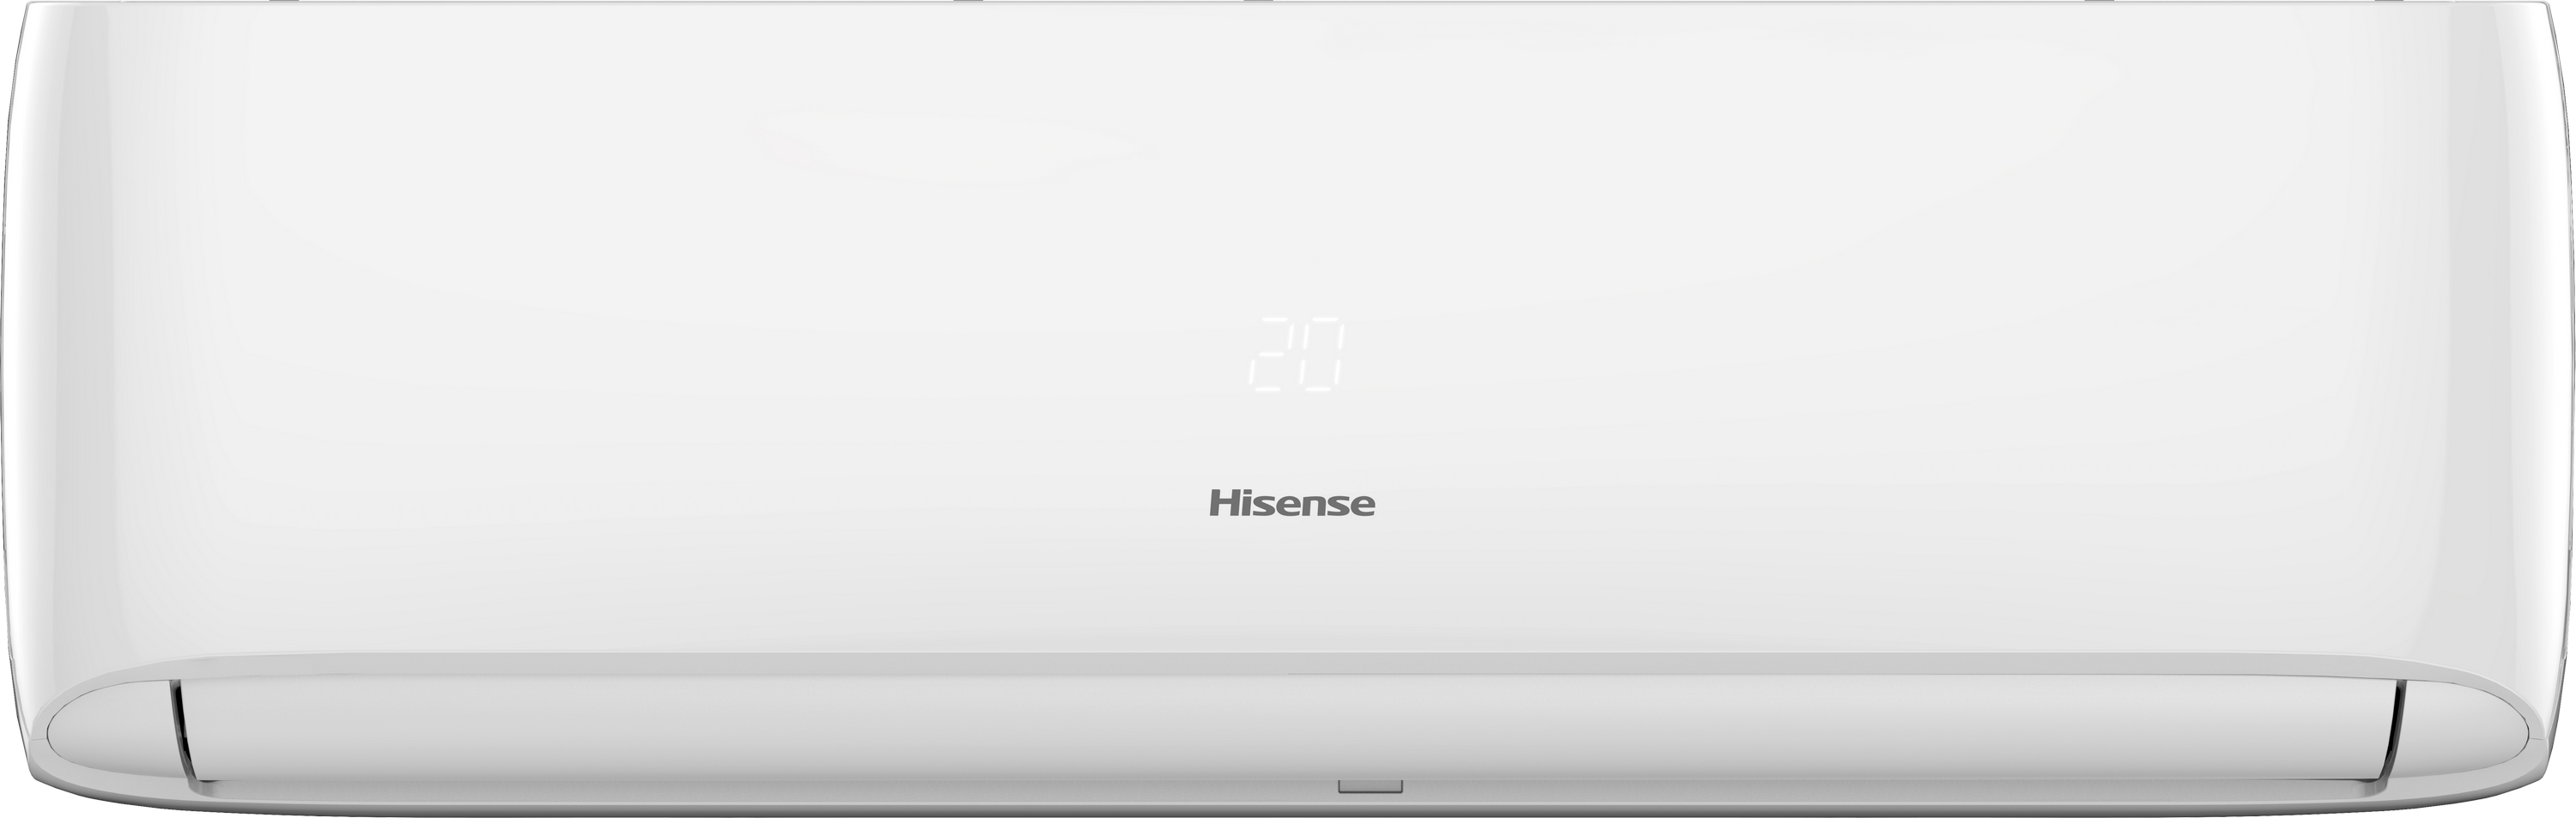 в продаже Кондиционер сплит-система Hisense Perla Eco CA35YR00 - фото 3